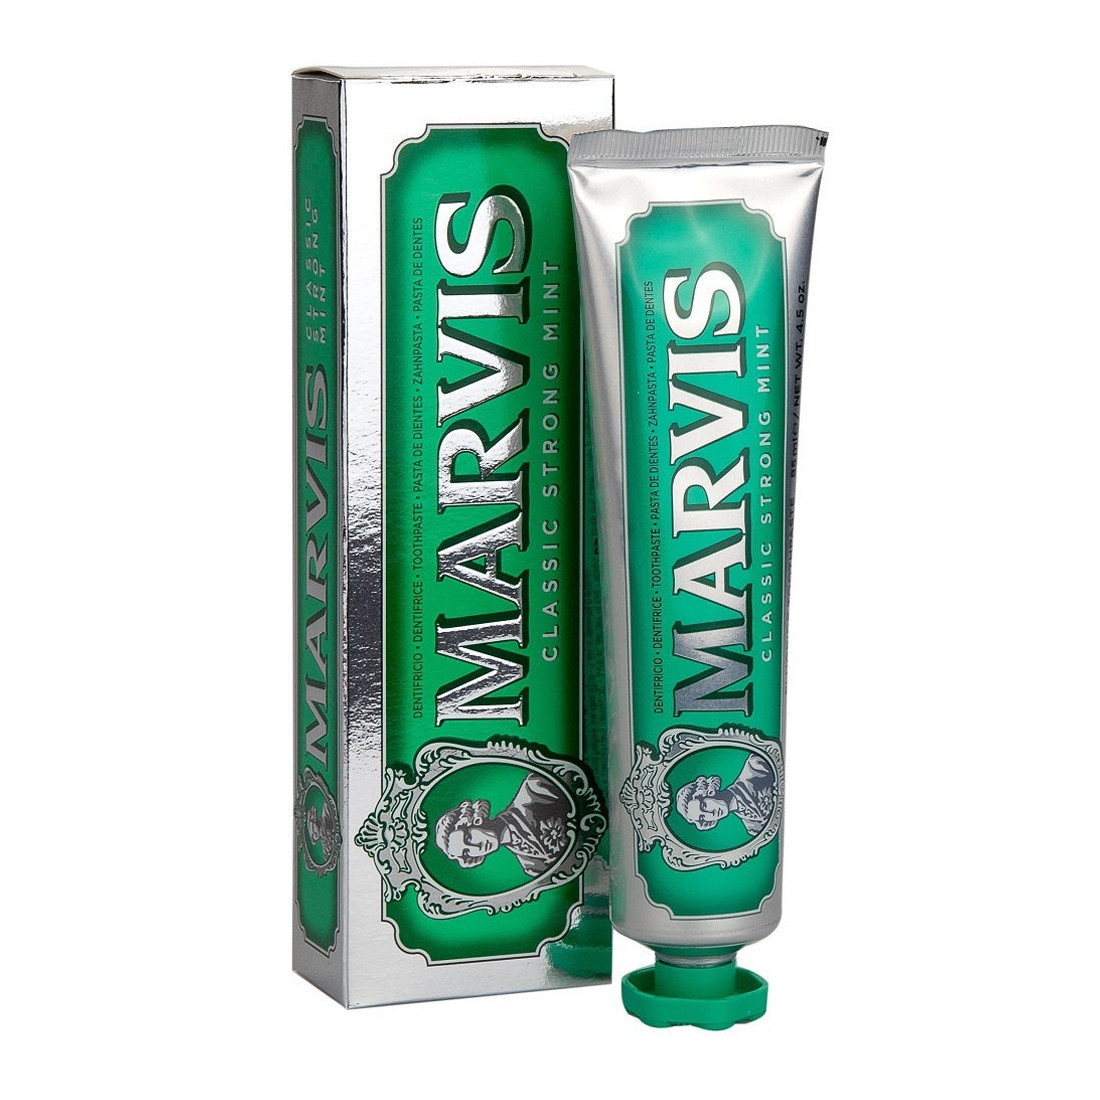 Marvis Classic Strong Mint - Зубная паста Классическая Насыщенная Мята